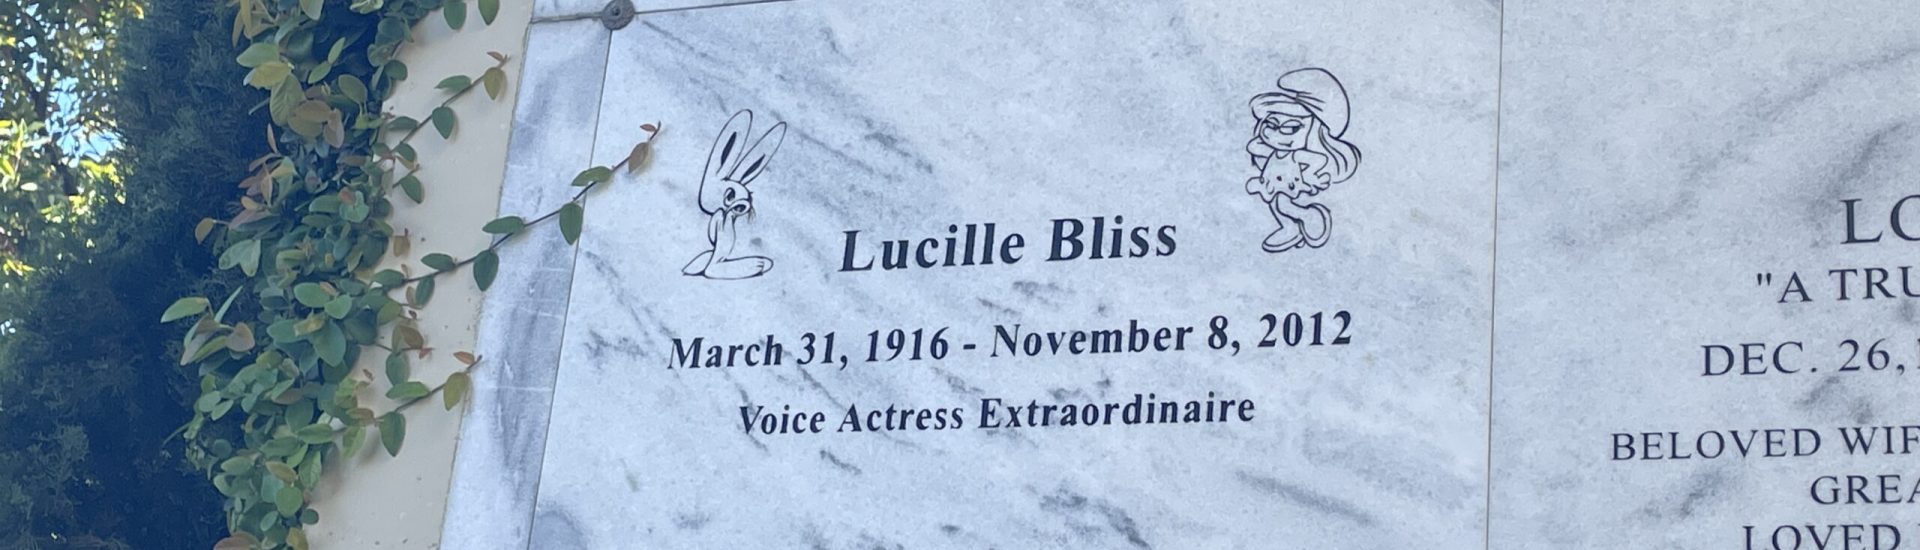 Lucille Bliss